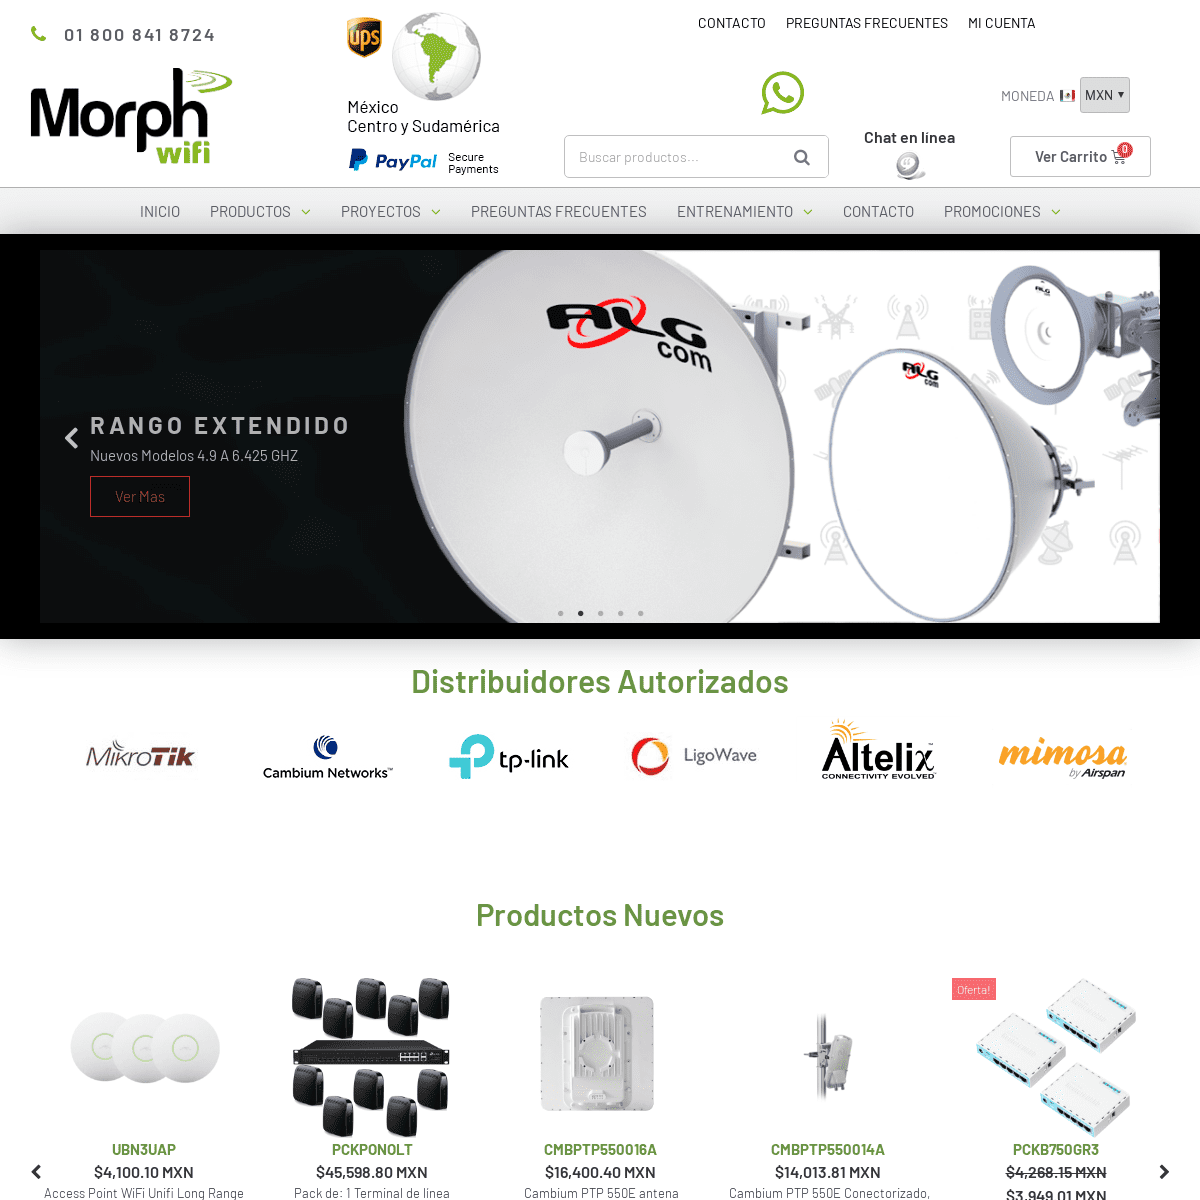 A complete backup of morphwifi.com